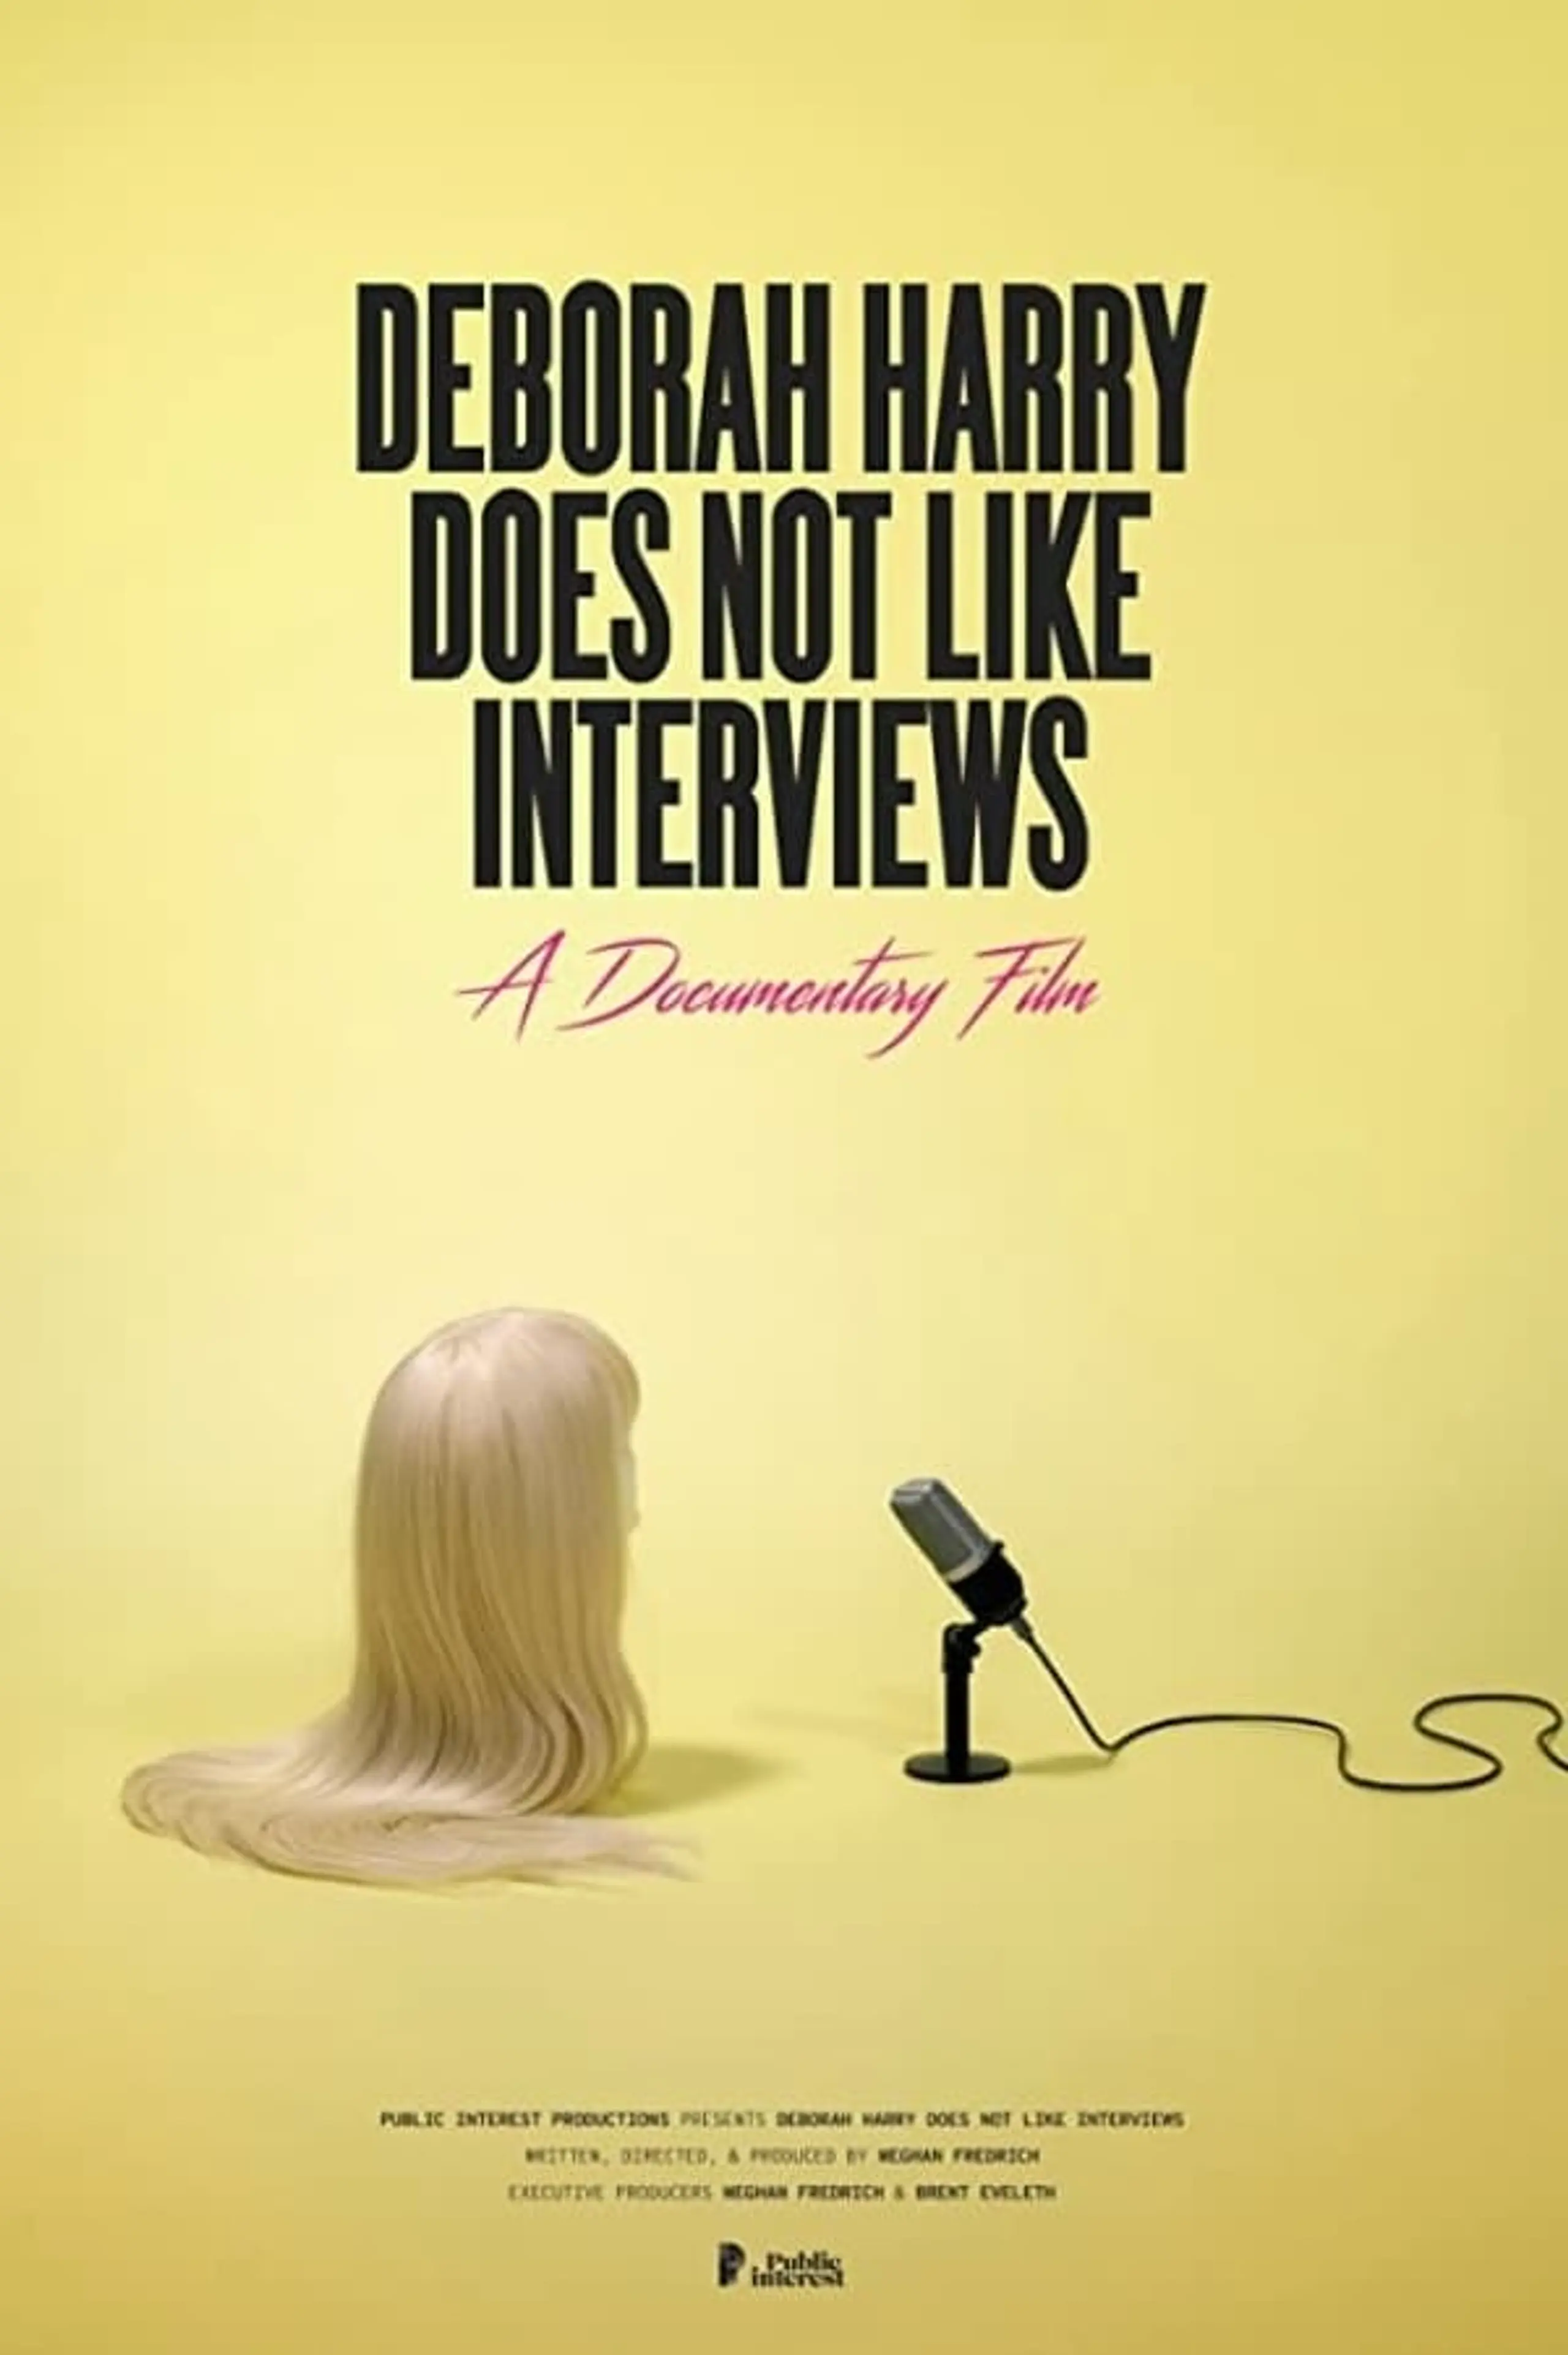 Deborah Harry Does Not Like Interviews